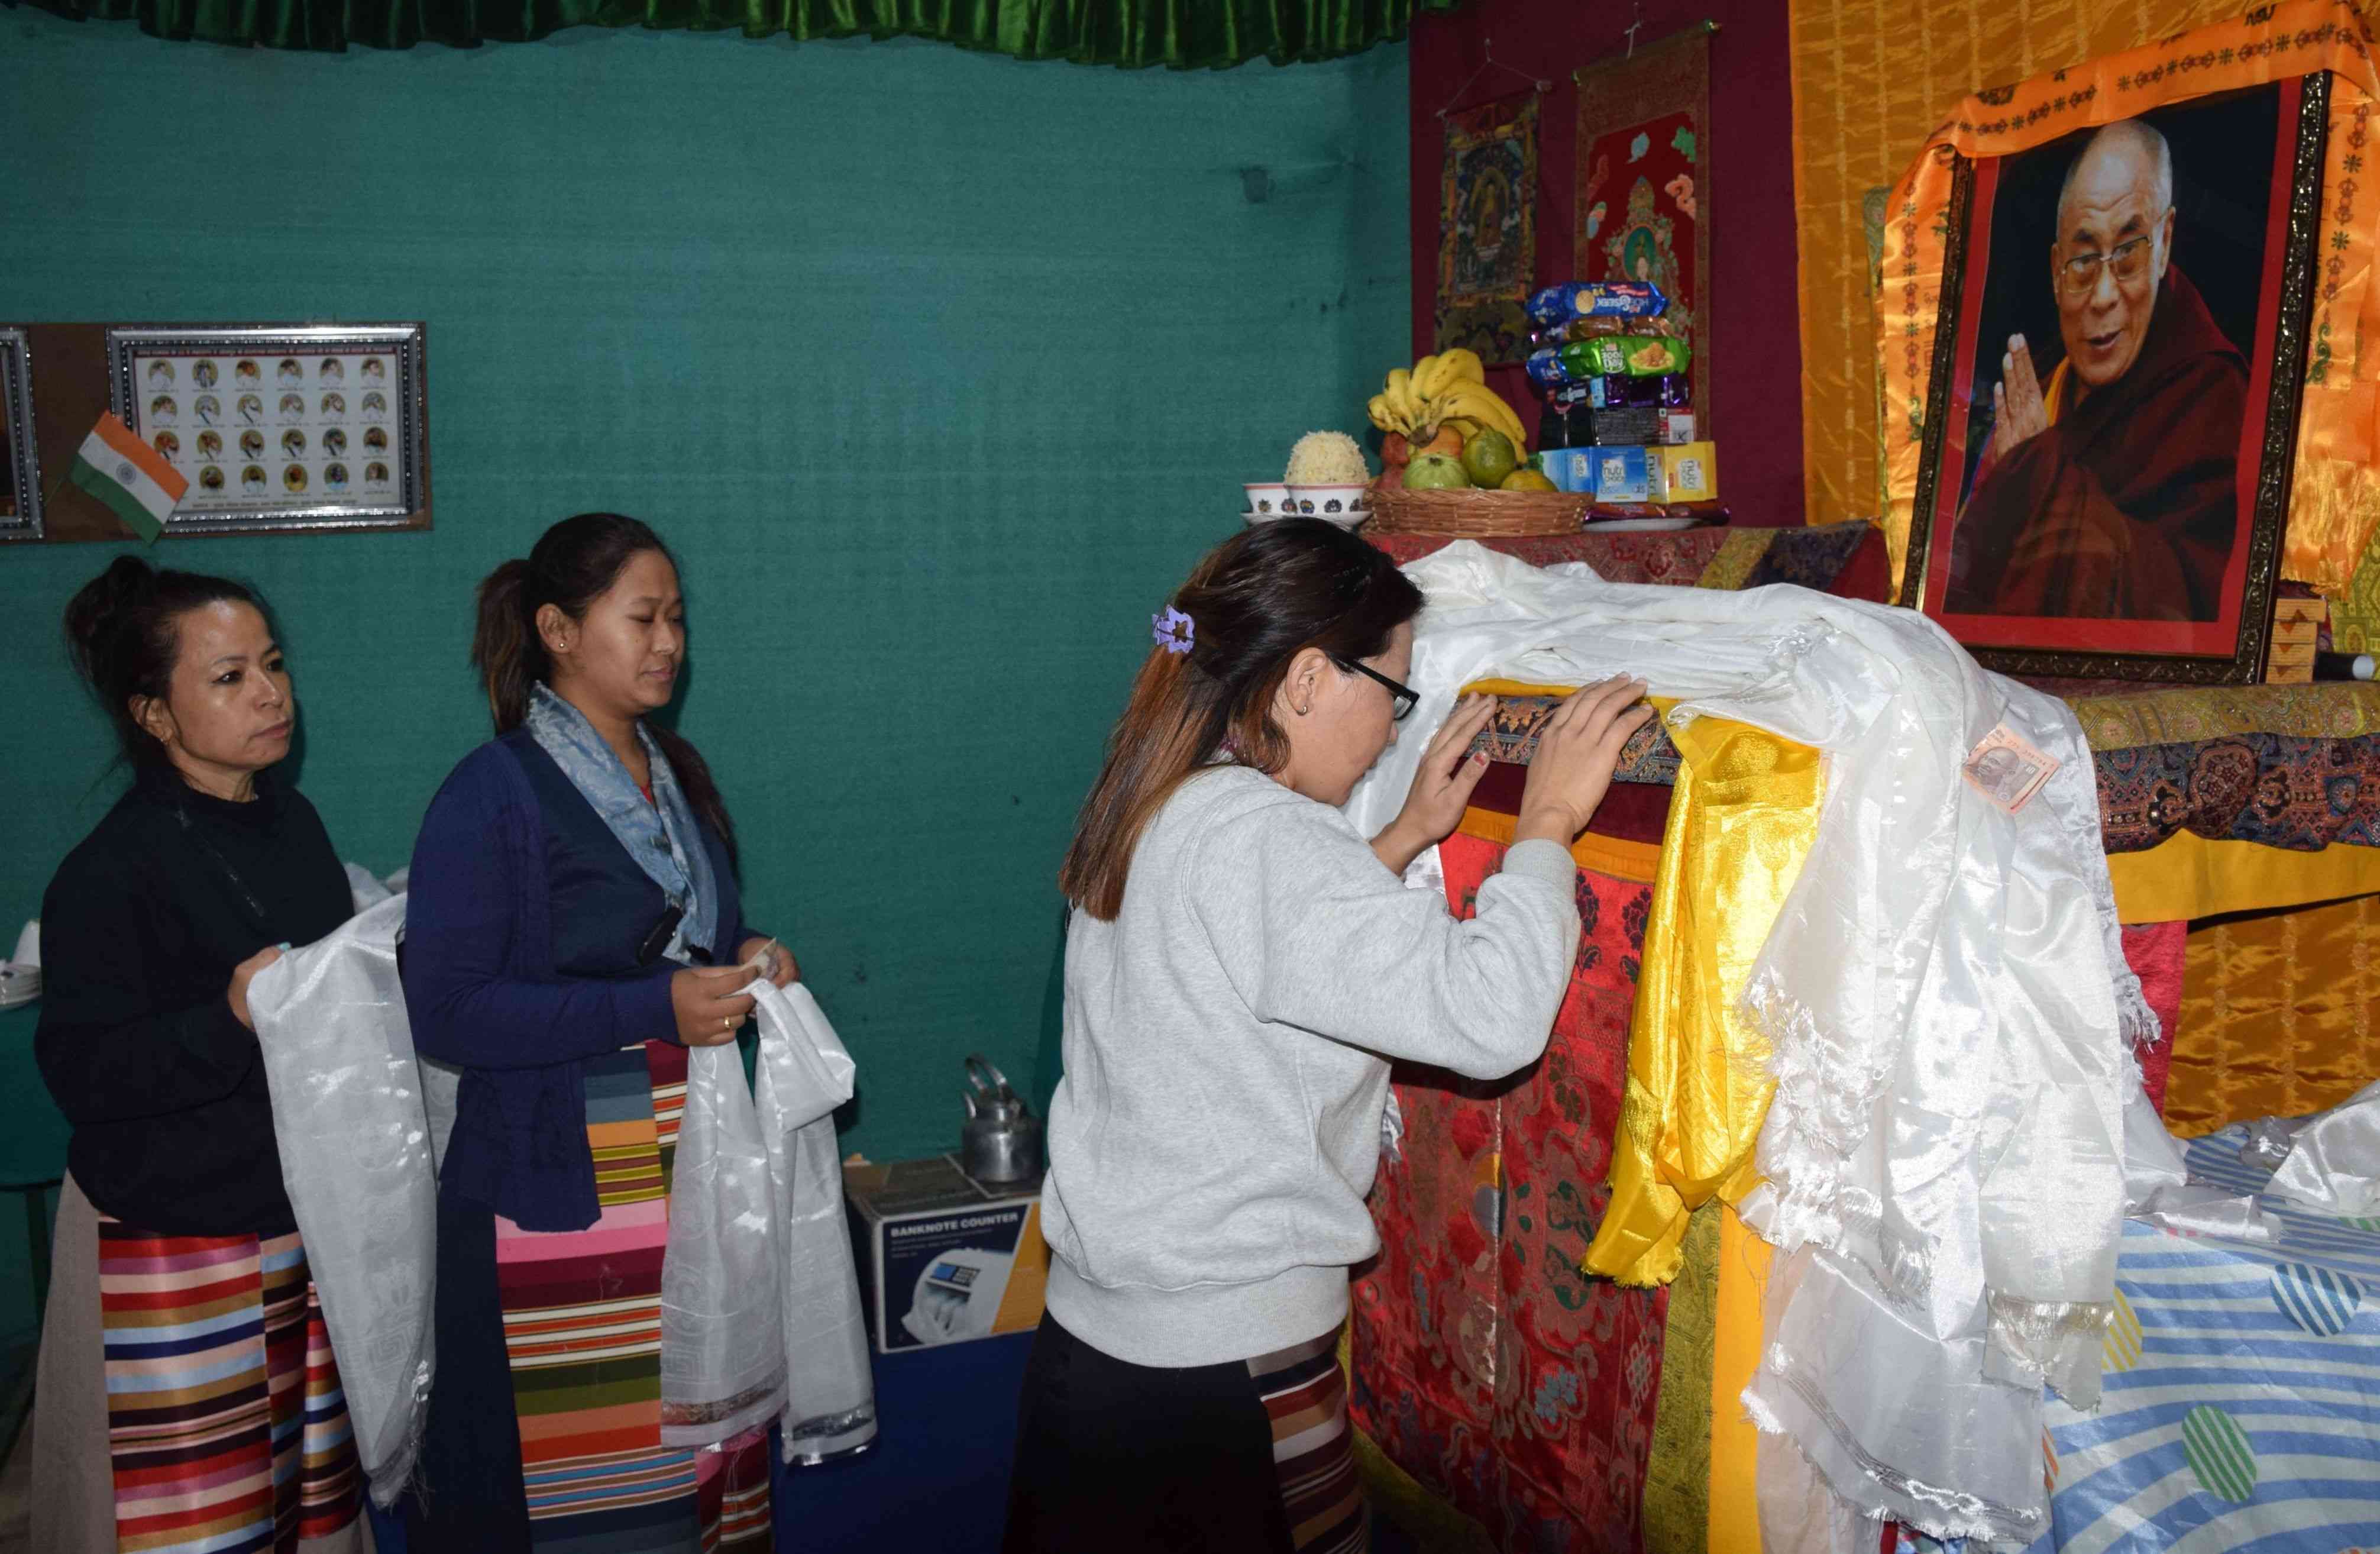 world human rights day celebrates at tibetian market